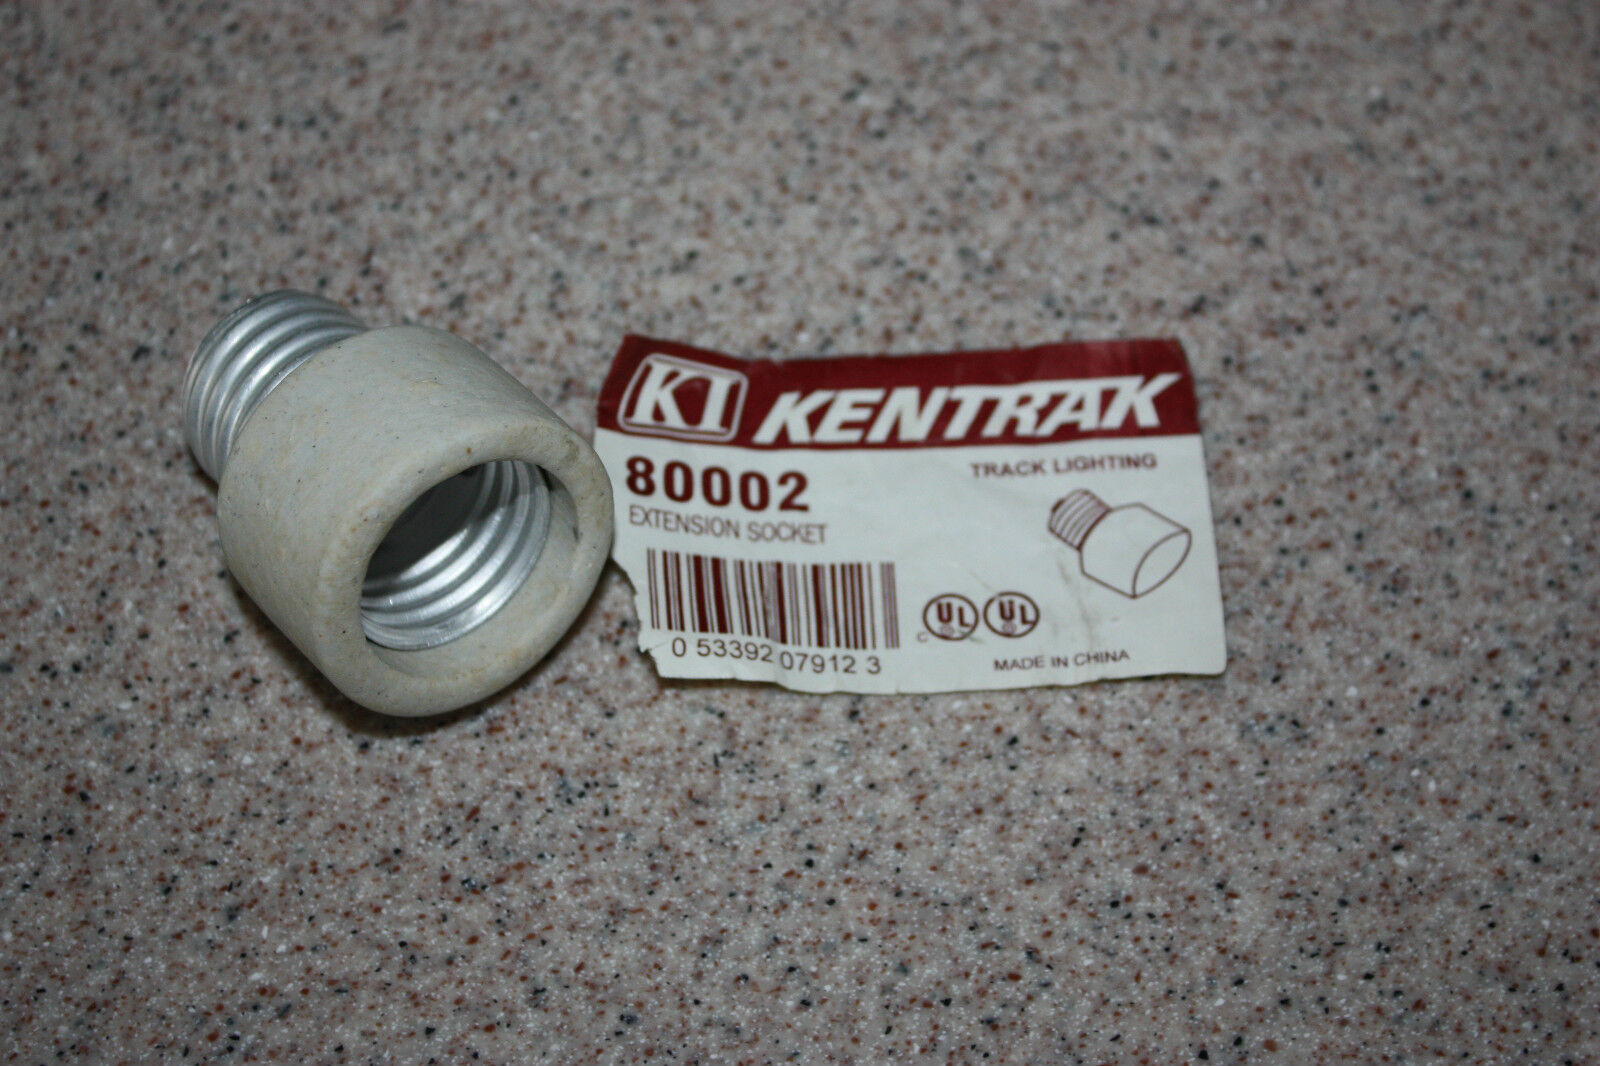 KenTrak KENROY TRACK LIGHTING CERAMIC 1" EXTENSION SOCKET - CHOOSE QUANTITY 1-12 - $12.00 - $24.00